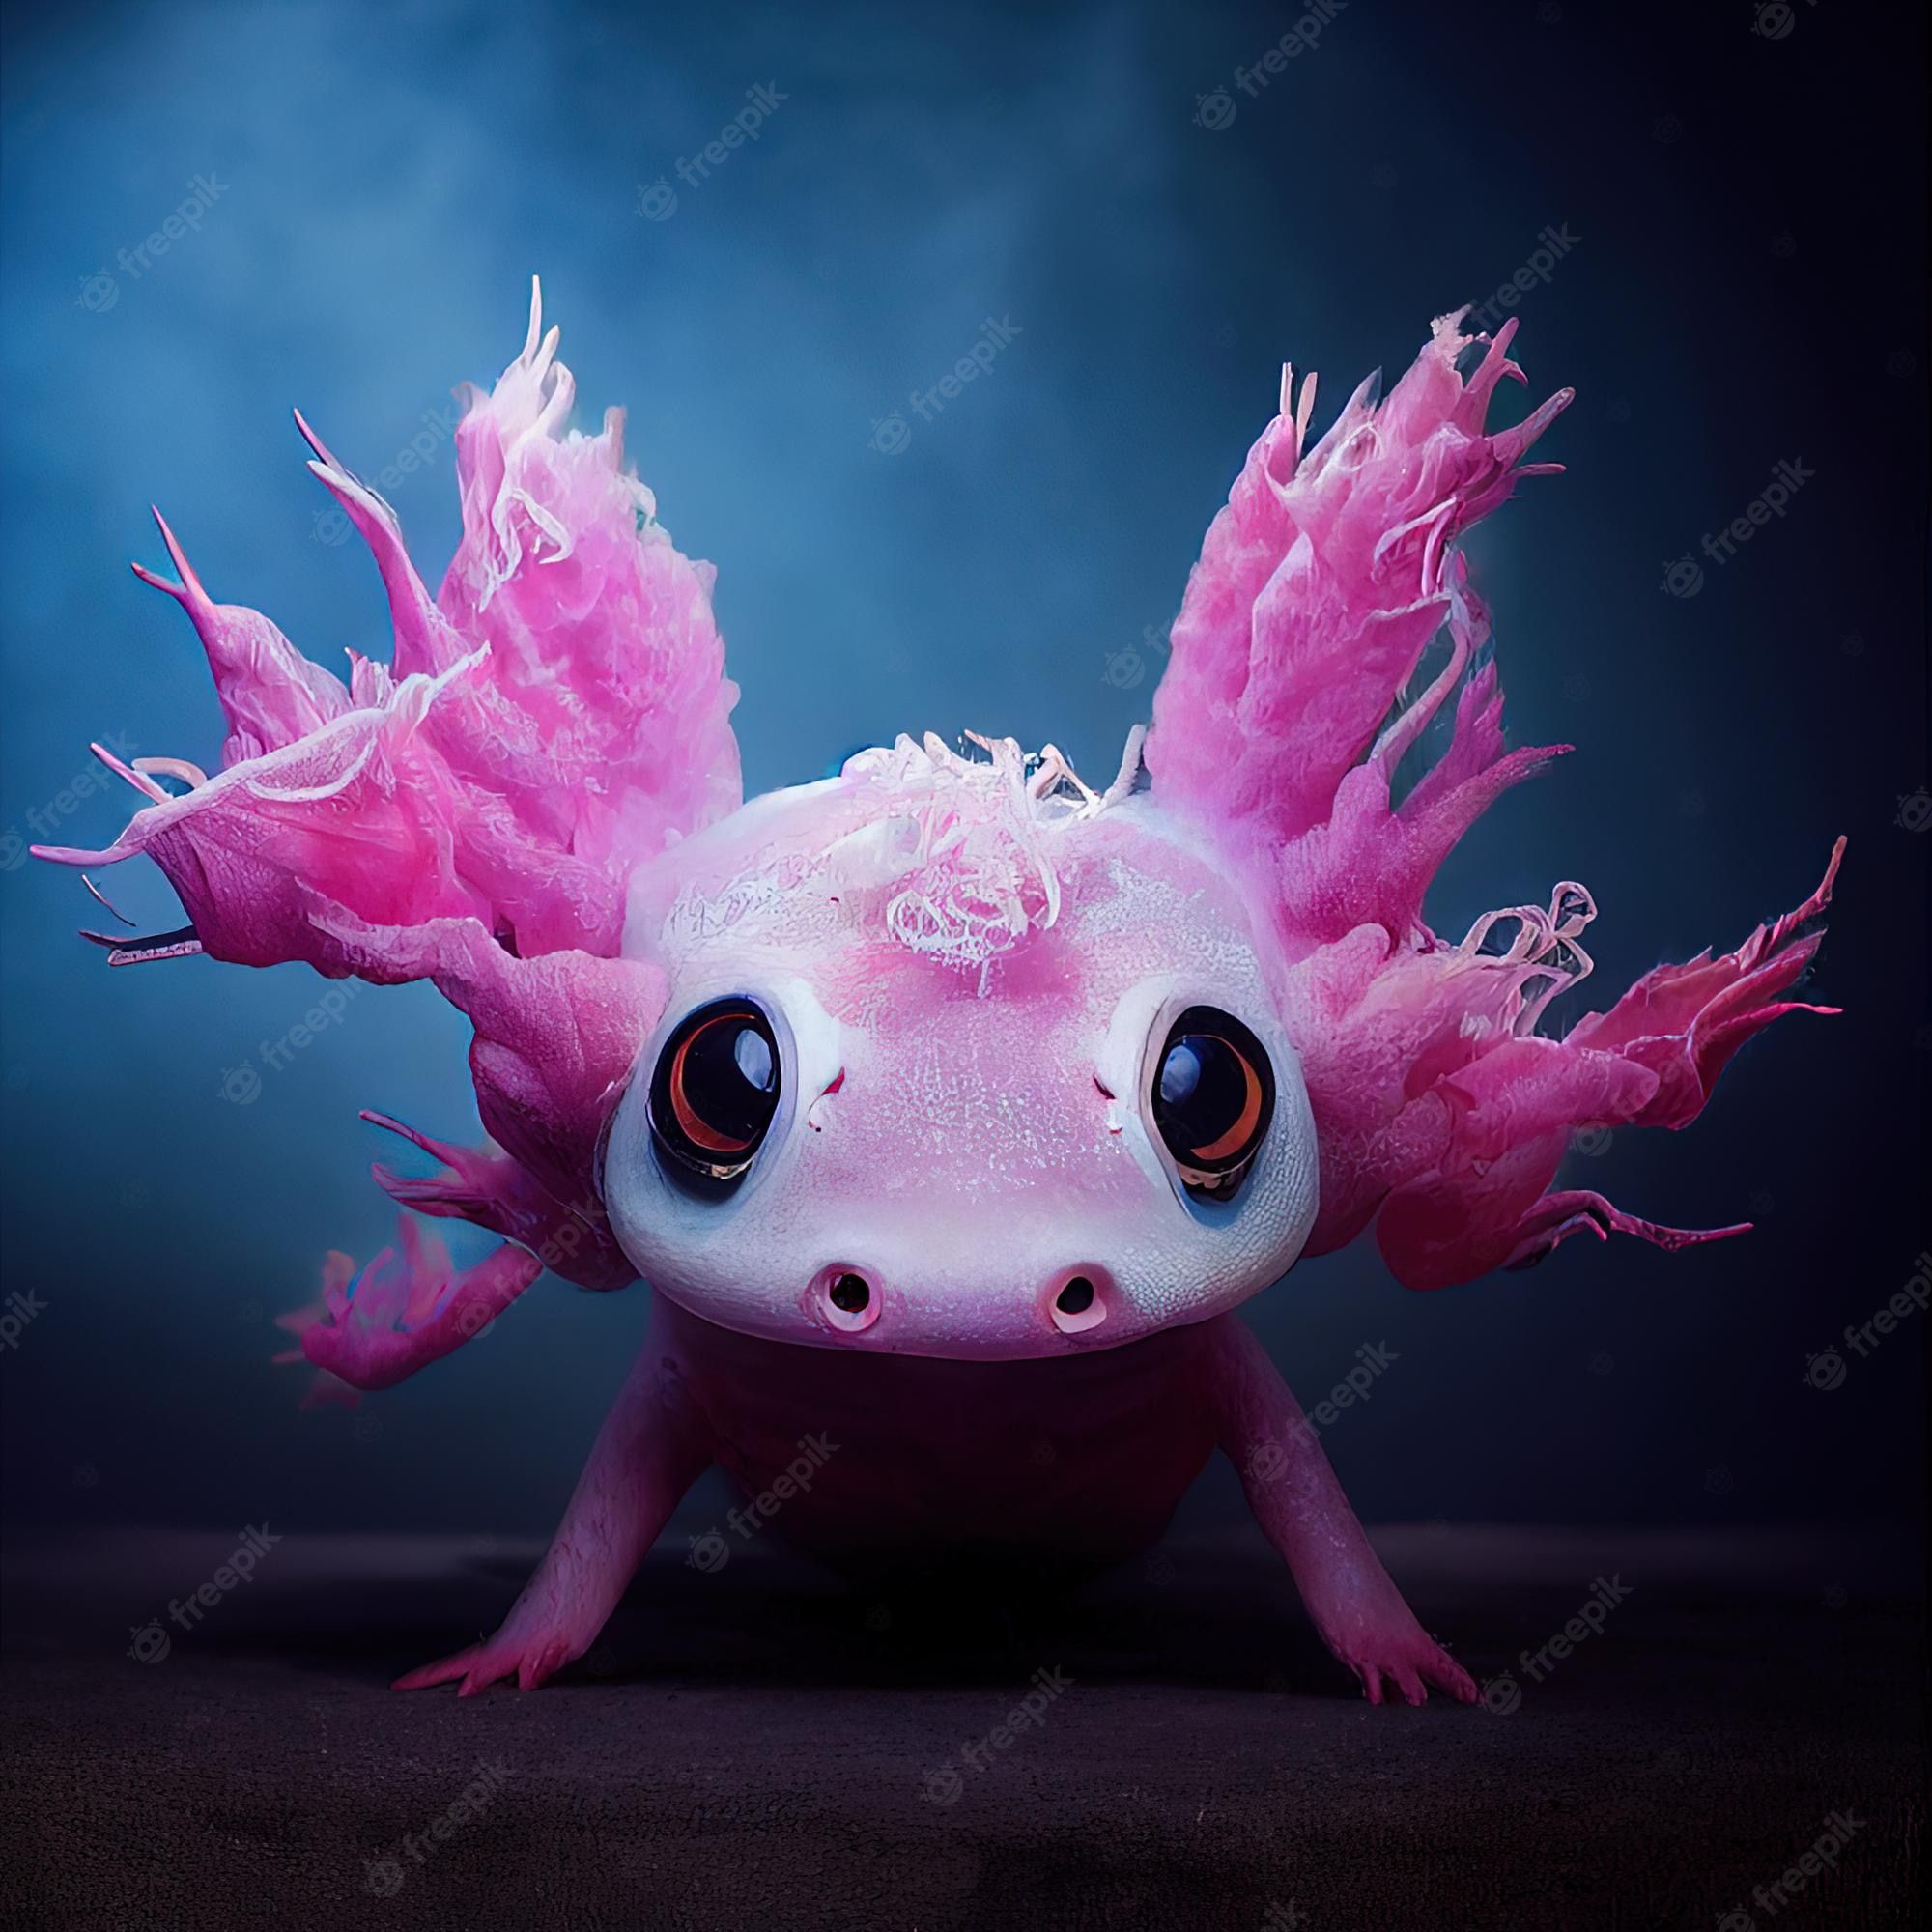 Premium Photo. Cute pink axolotl on blue background